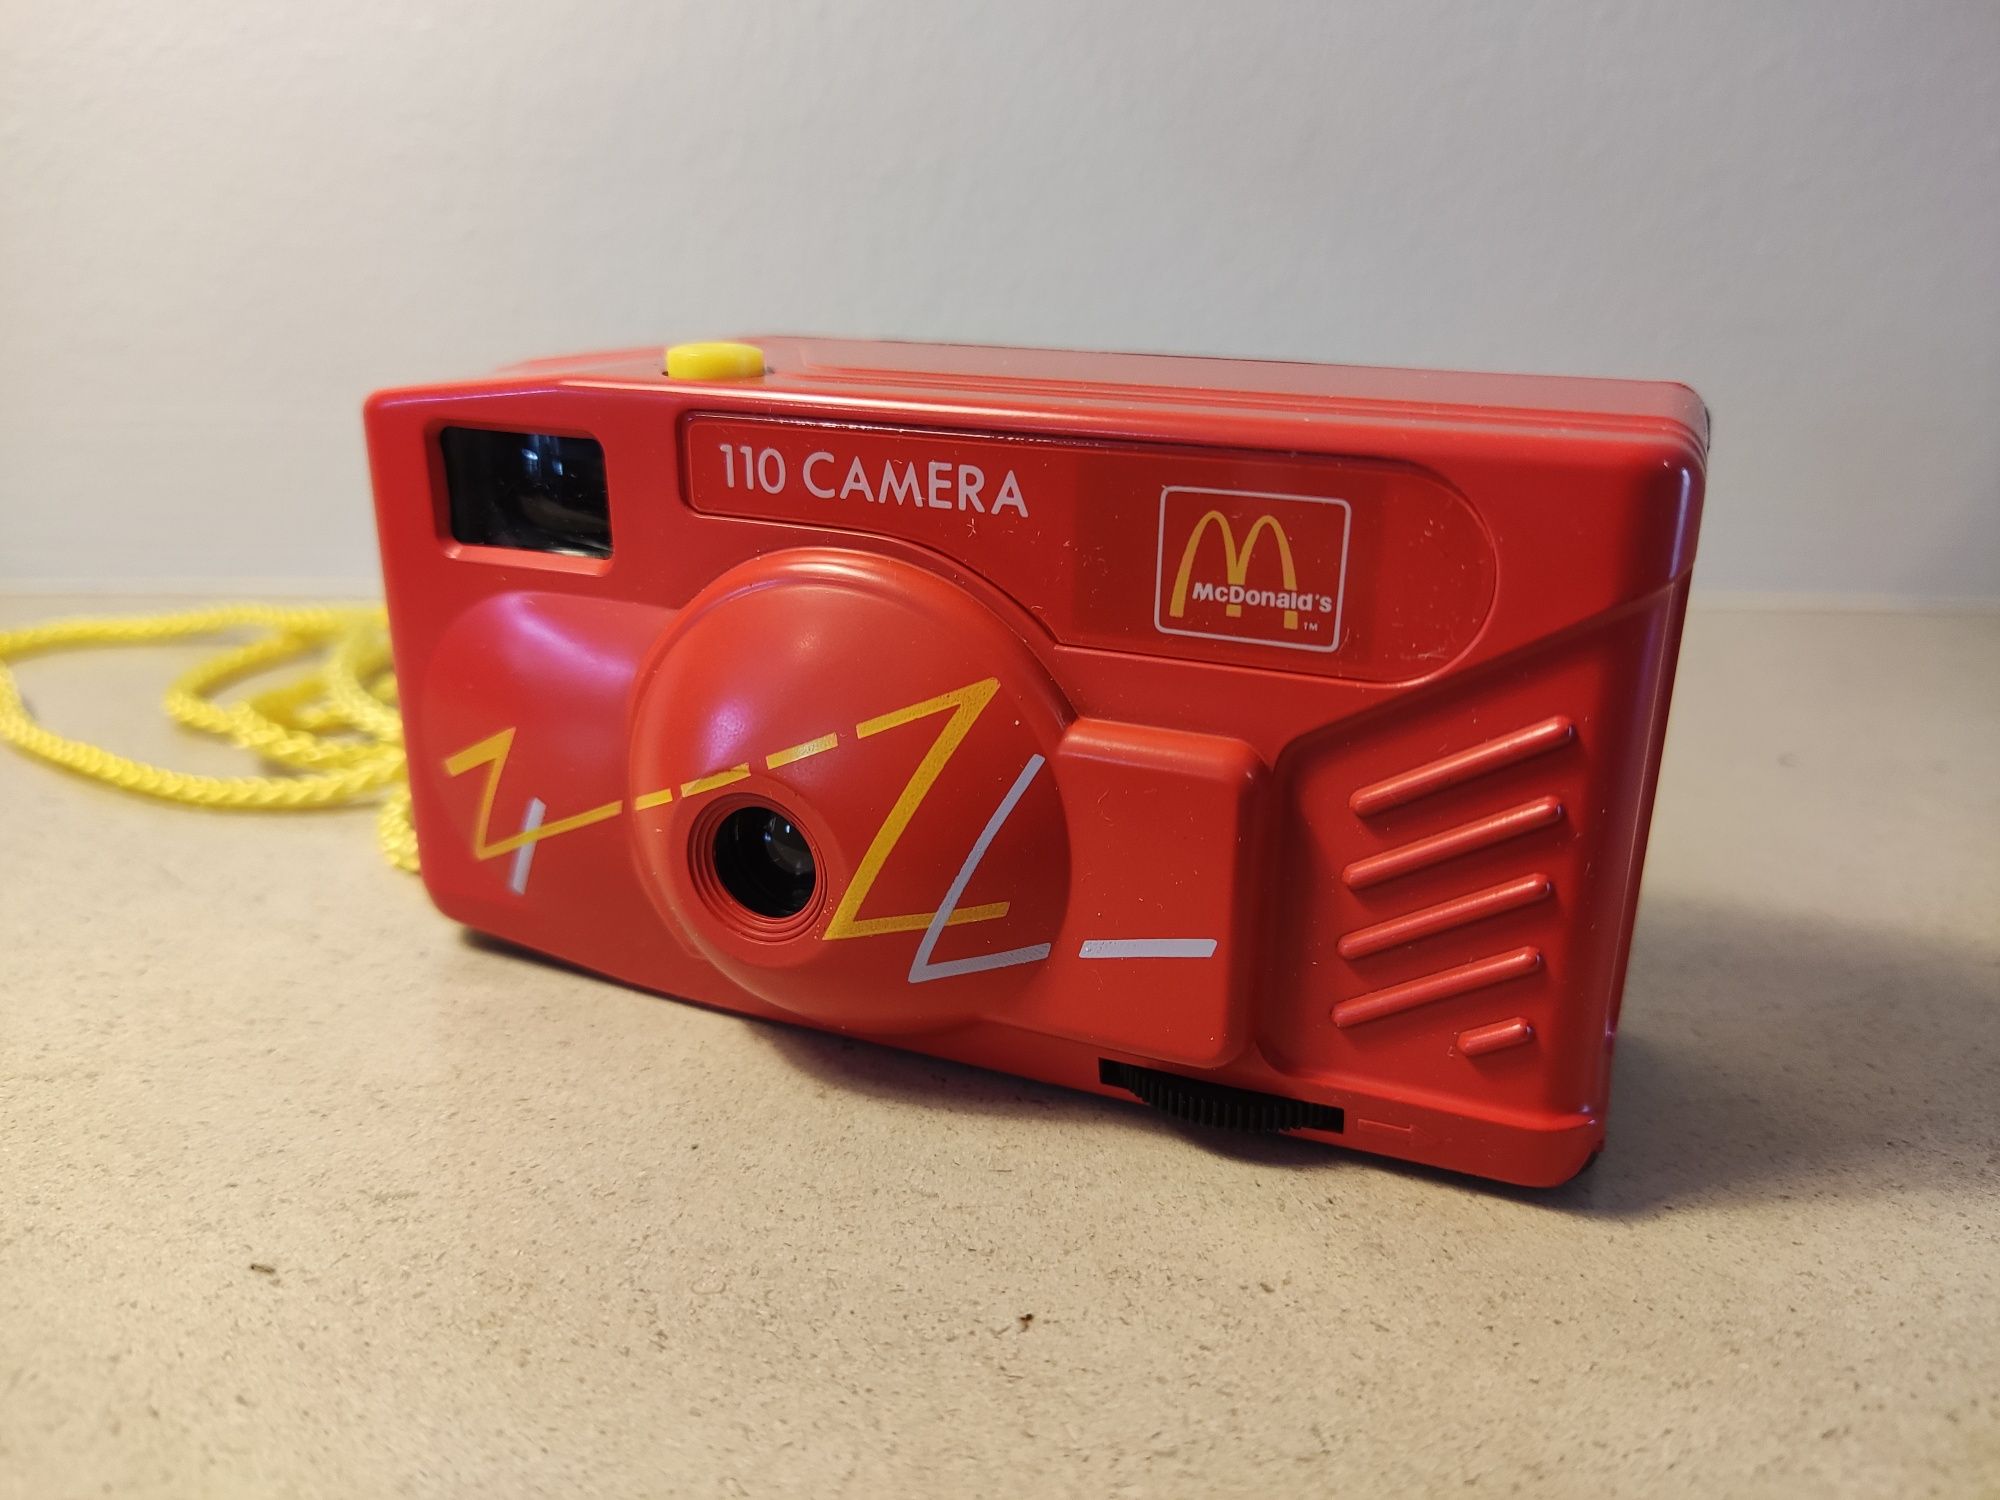 camera fotográfica McDonald’s 110 Camera - vintage